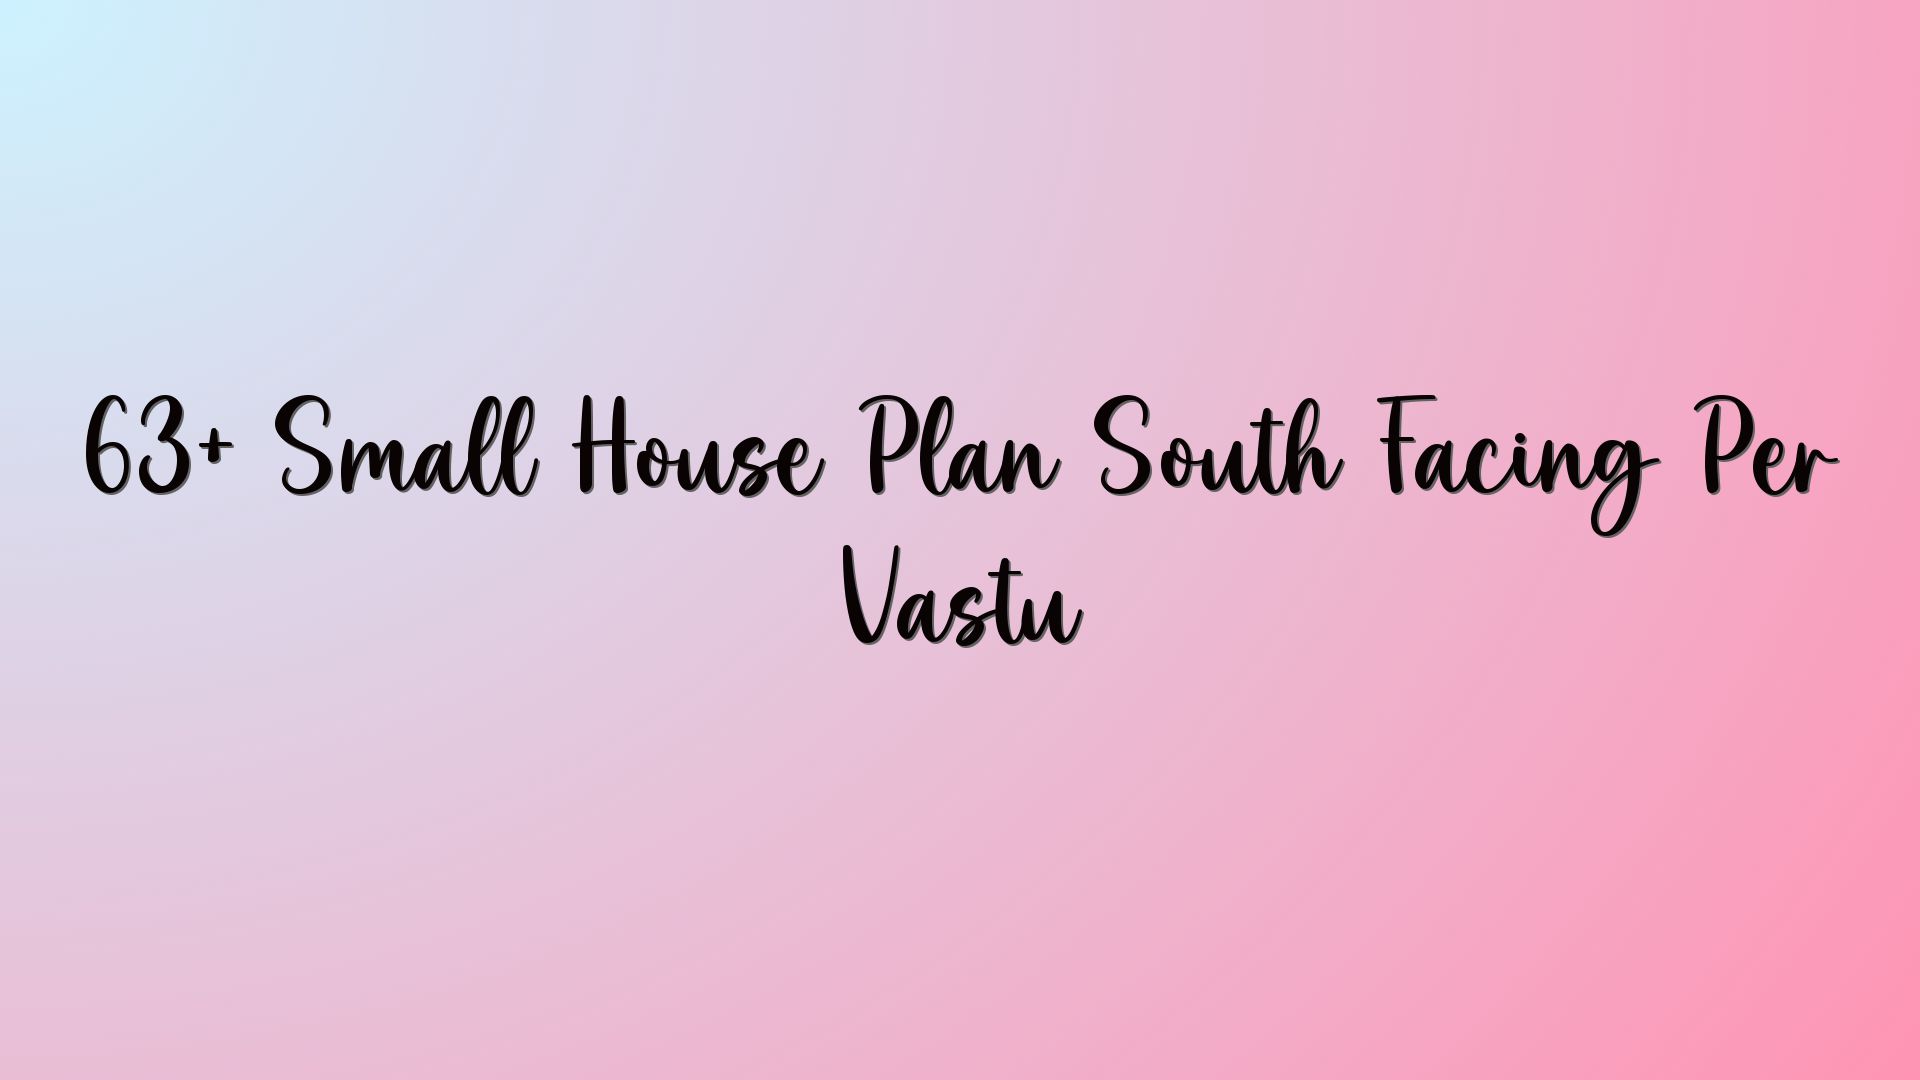 63+ Small House Plan South Facing Per Vastu